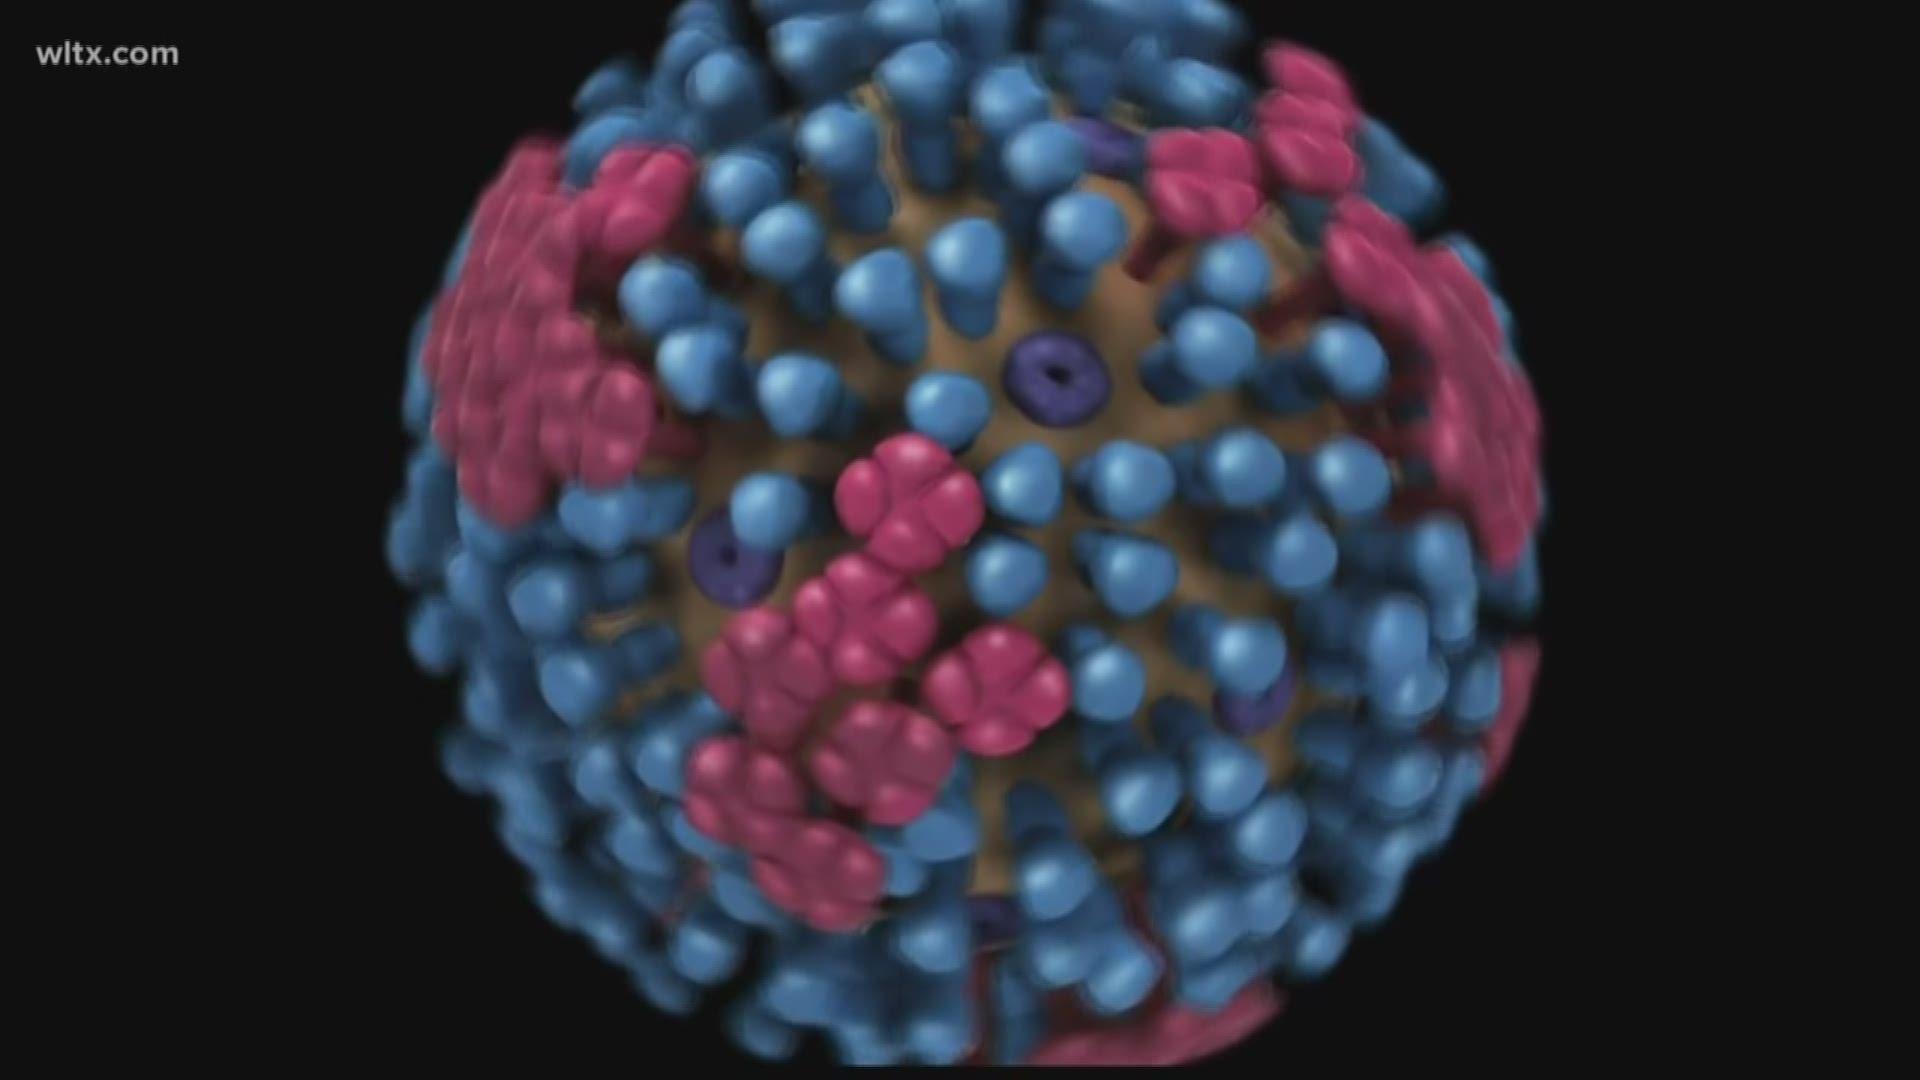 Over 70 flu deaths in South Carolina so far this year.